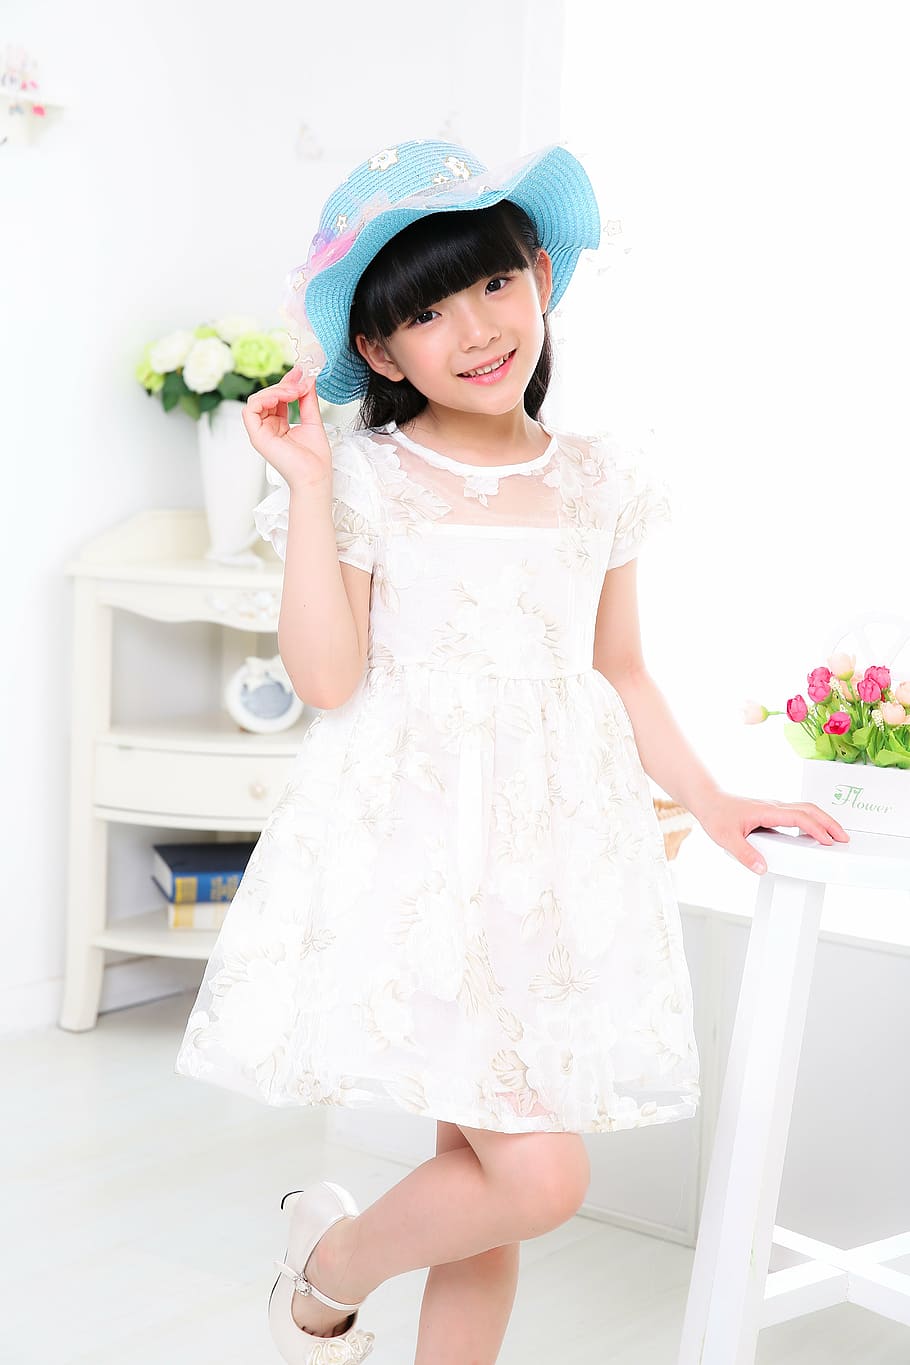 child, girls, portrait, white dress, hat, bid, asia, one Person, smiling, cheerful